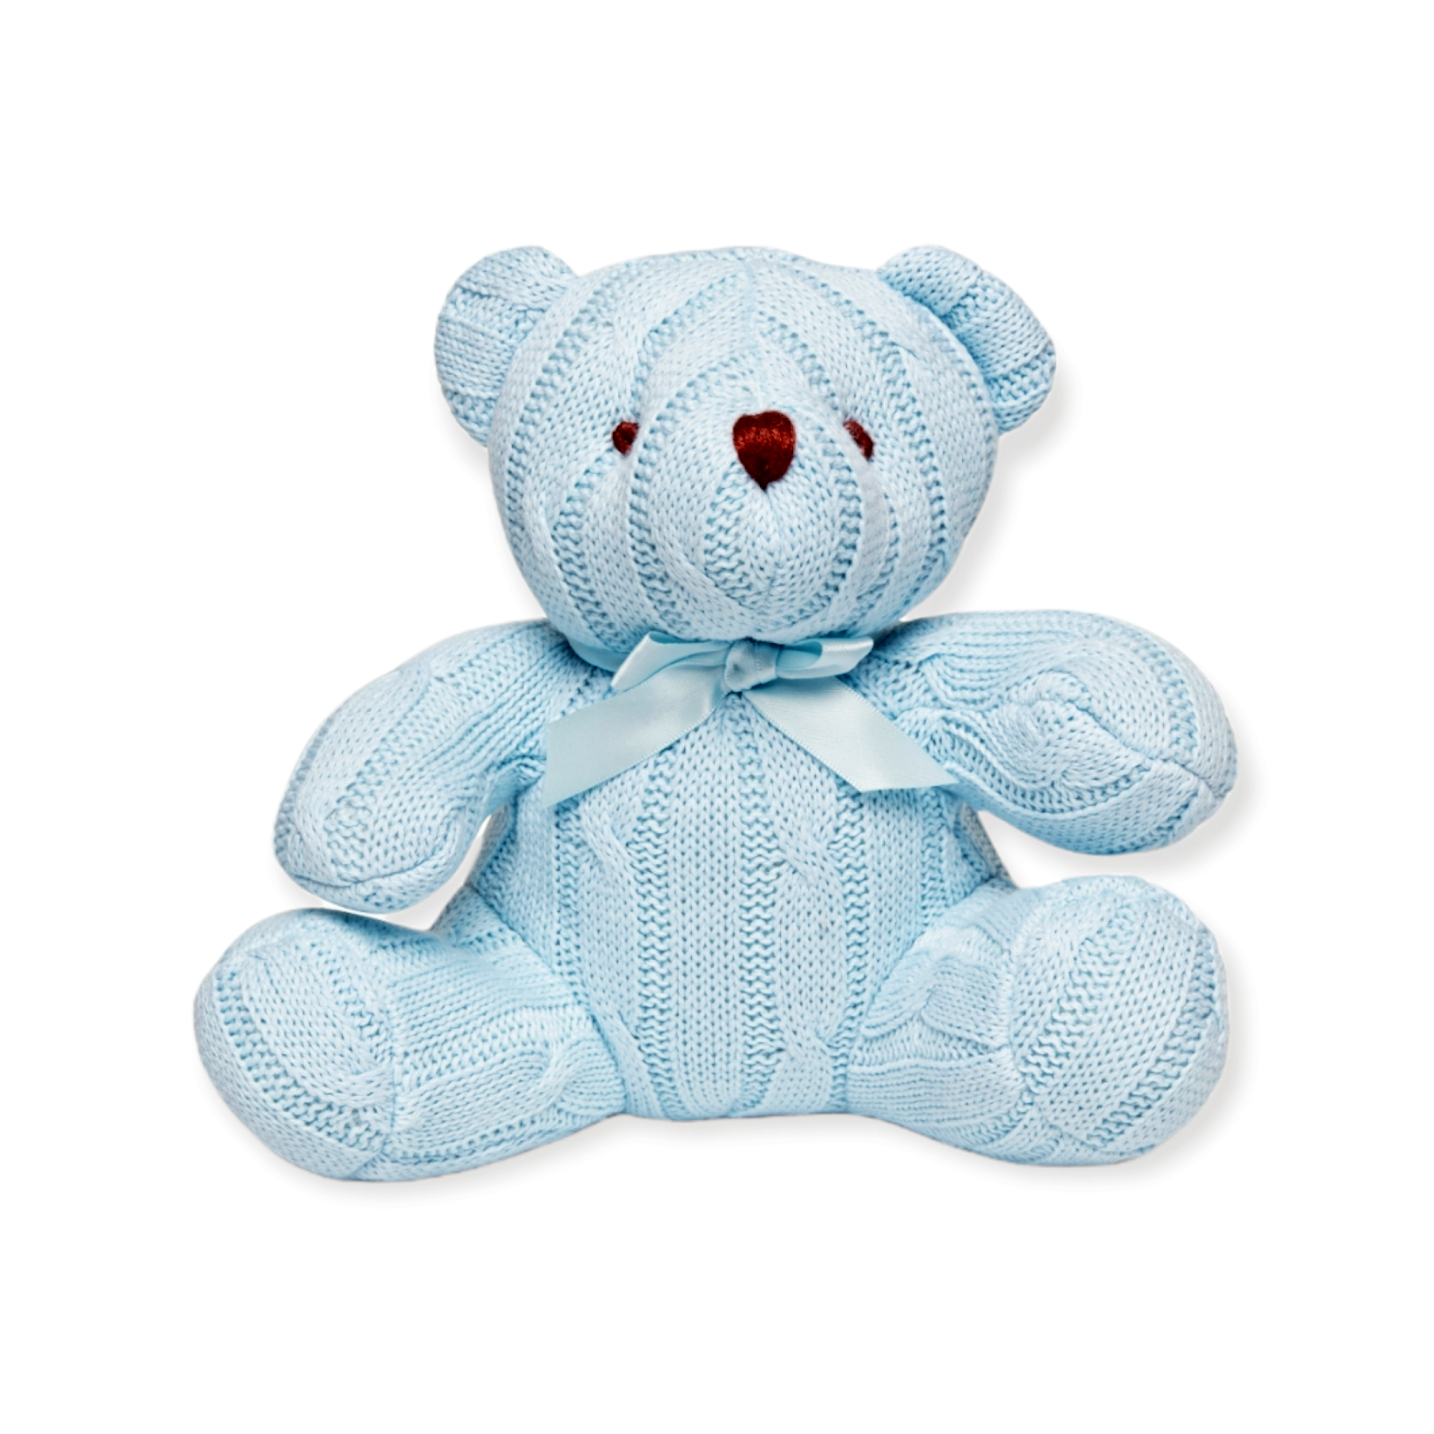 Cable Knit Teddy Bears